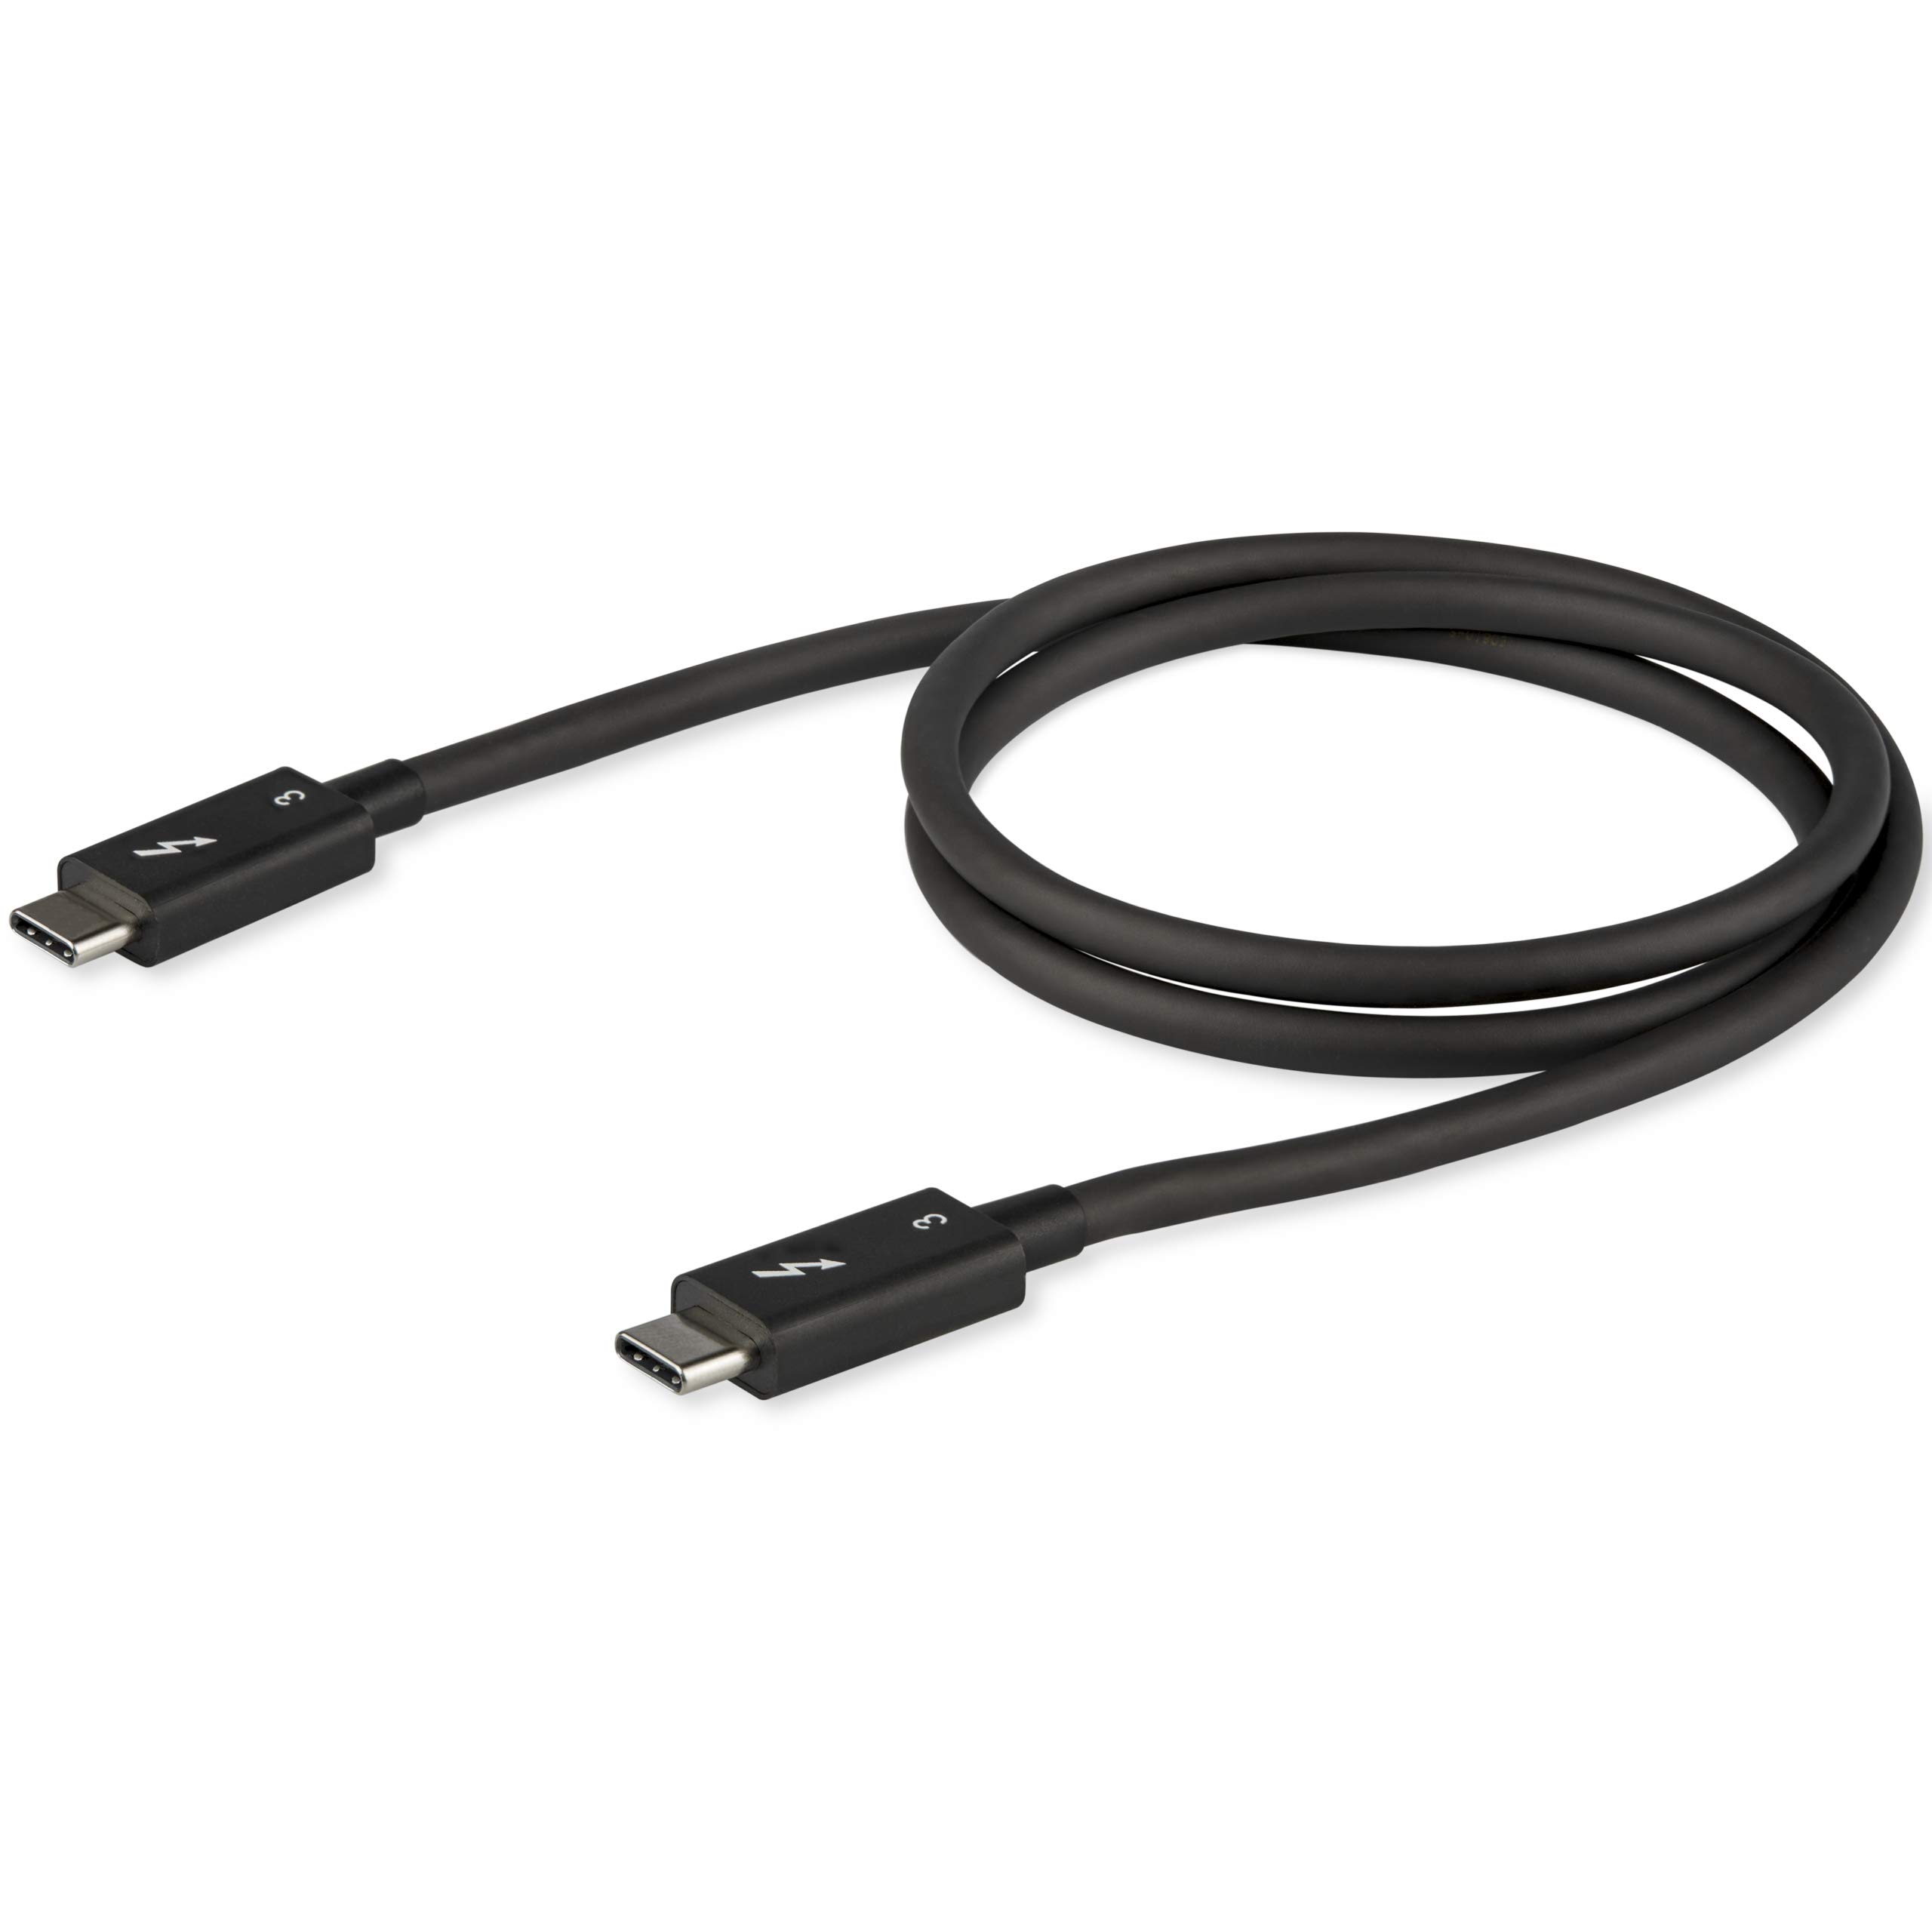 StarTech.com 2.6ft (80cm) Passive Thunderbolt 3 Cable, 40Gbps, 100W PD, 4K/5K Video, Thunderbolt Cable, Compatible with USB4/DP Alt Mode, Thunderbolt 4, USB 3.2/Type-C (TBLT34MM80CM)